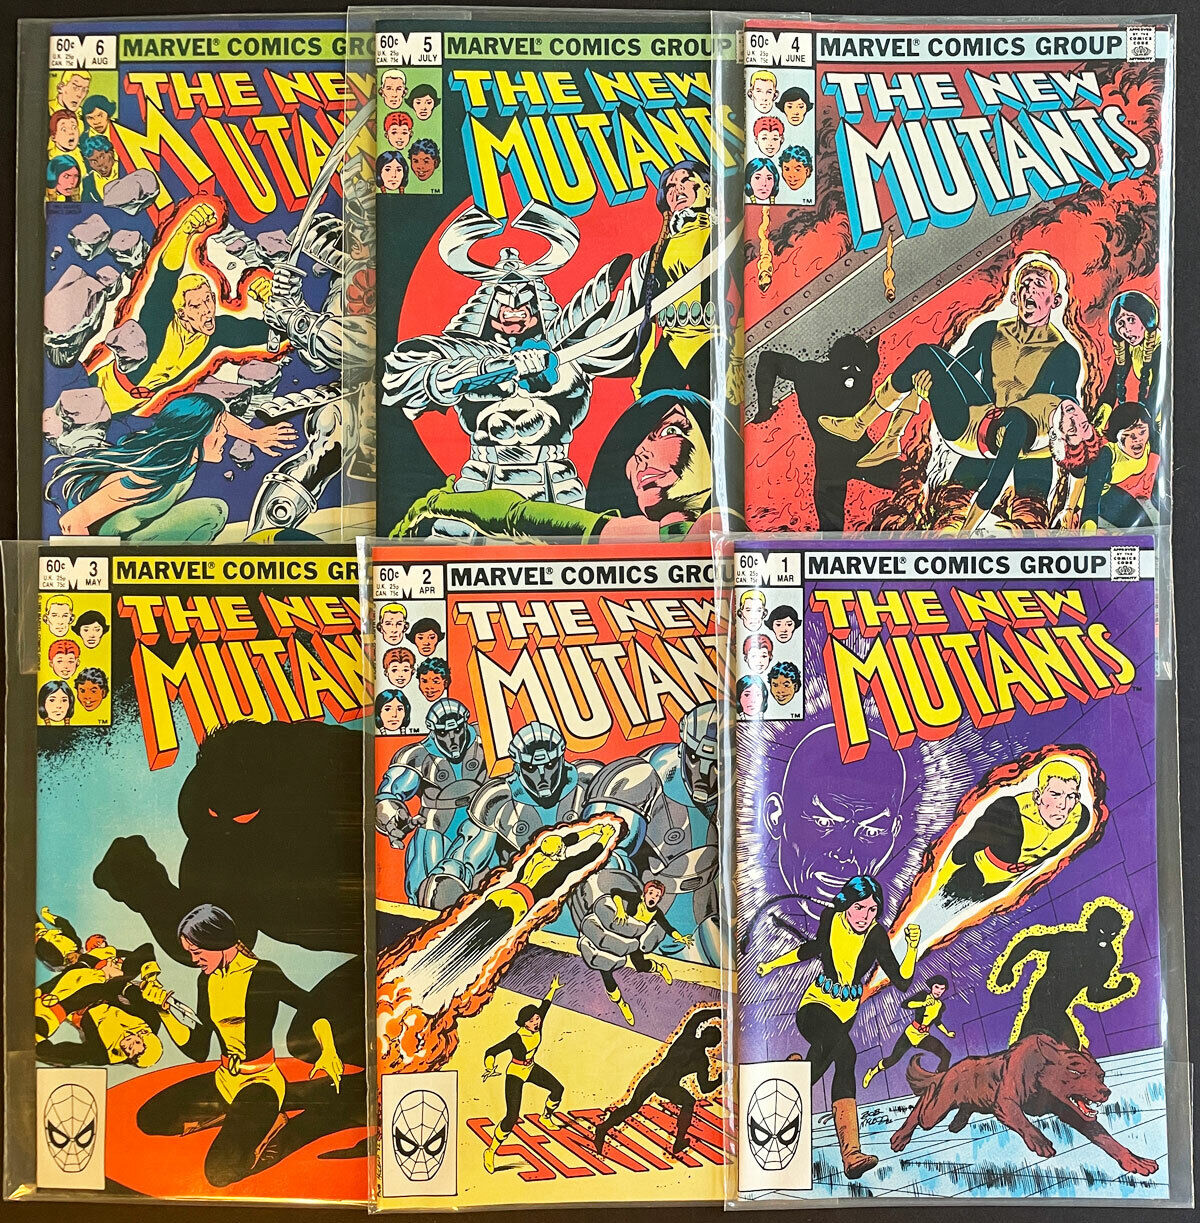 The New Mutants #1-6 (1982, Marvel Comics) by Chris Claremont & Bob McLeod